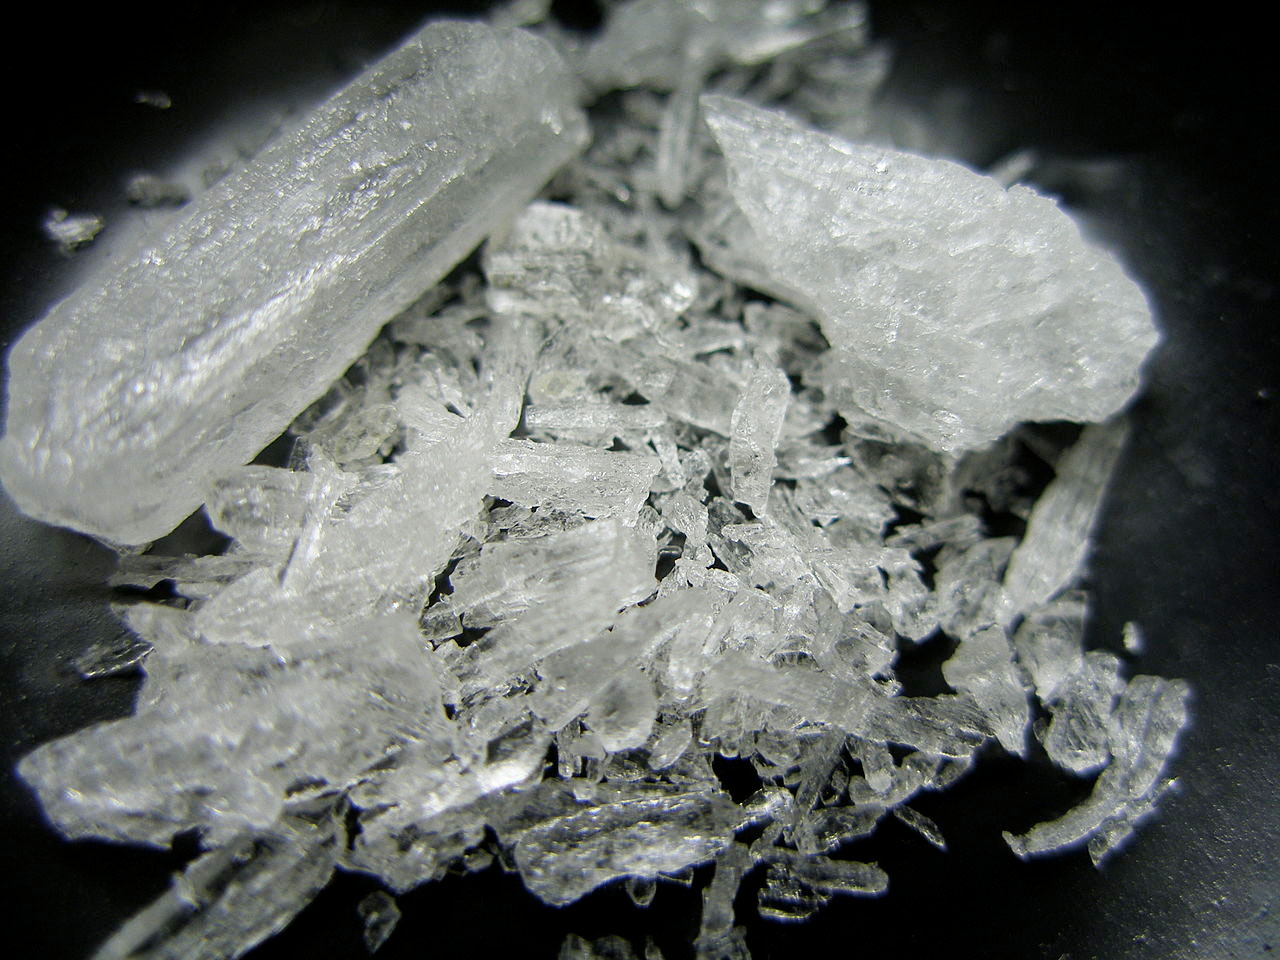 File photo of crystal meth. (Photo: Wikimedia Commons)